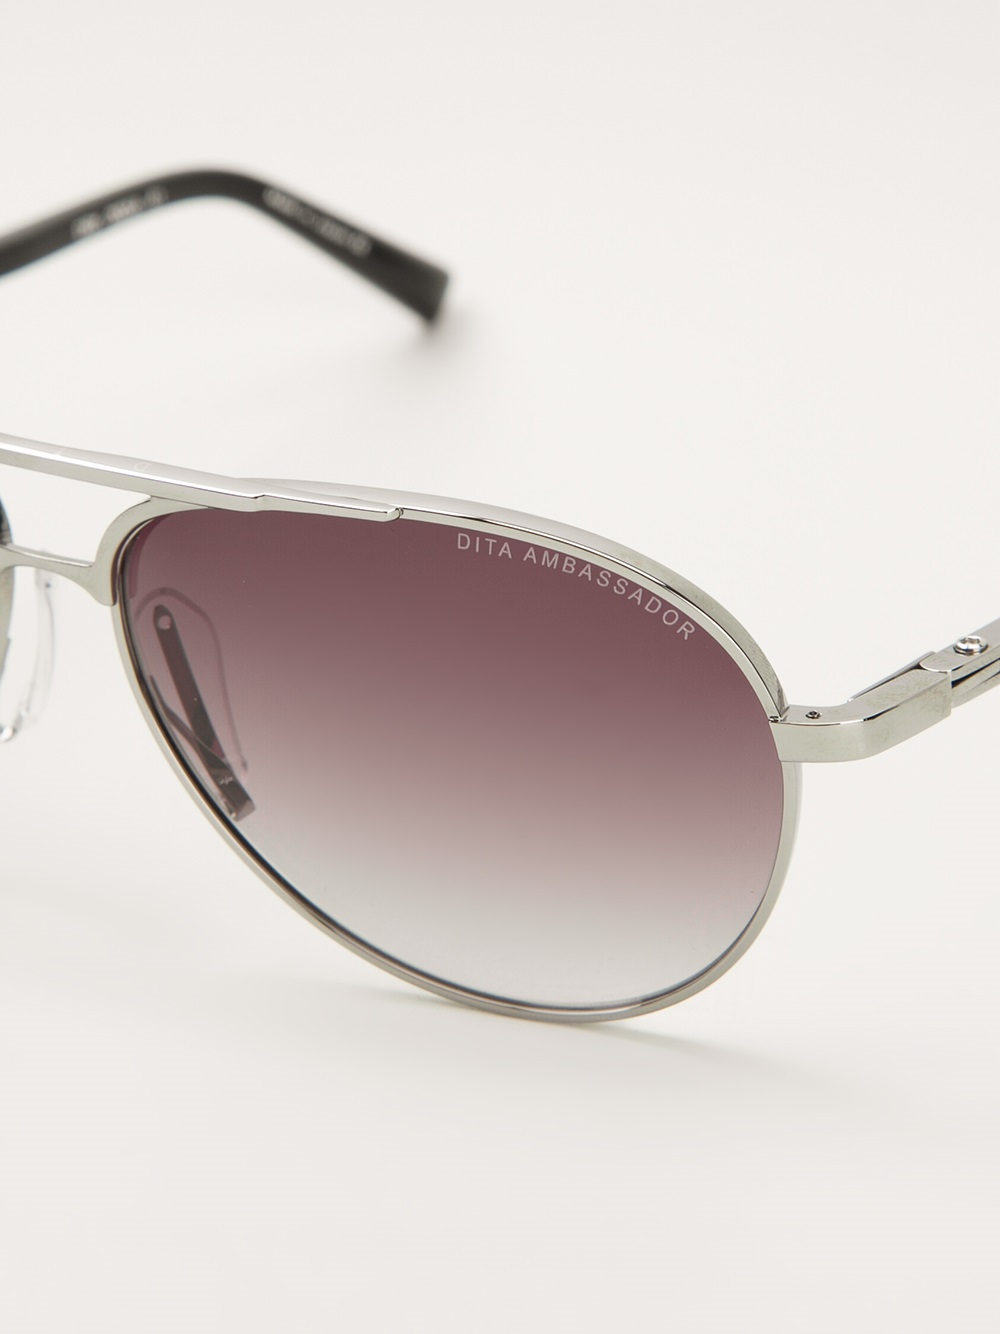 Dita Eyewear 'Ambassador' Sunglasses in Metallic for Men - Lyst